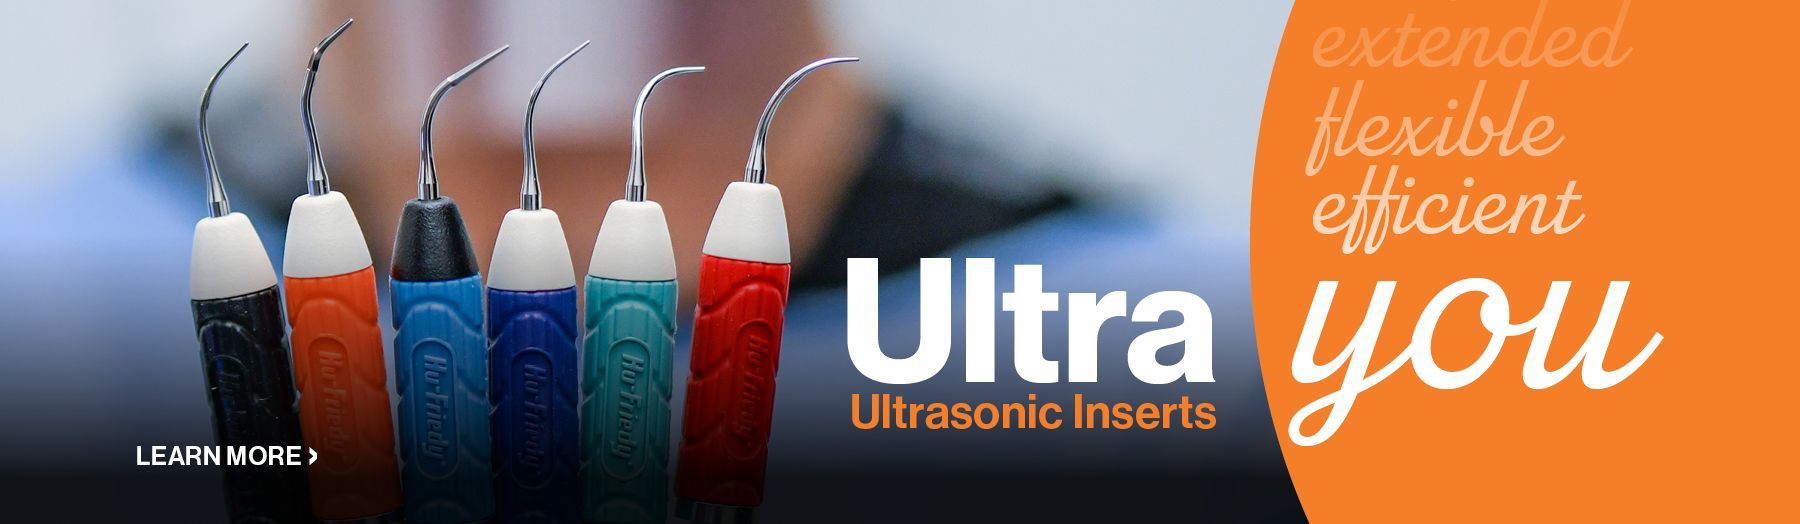 Ultrasonic Inserts